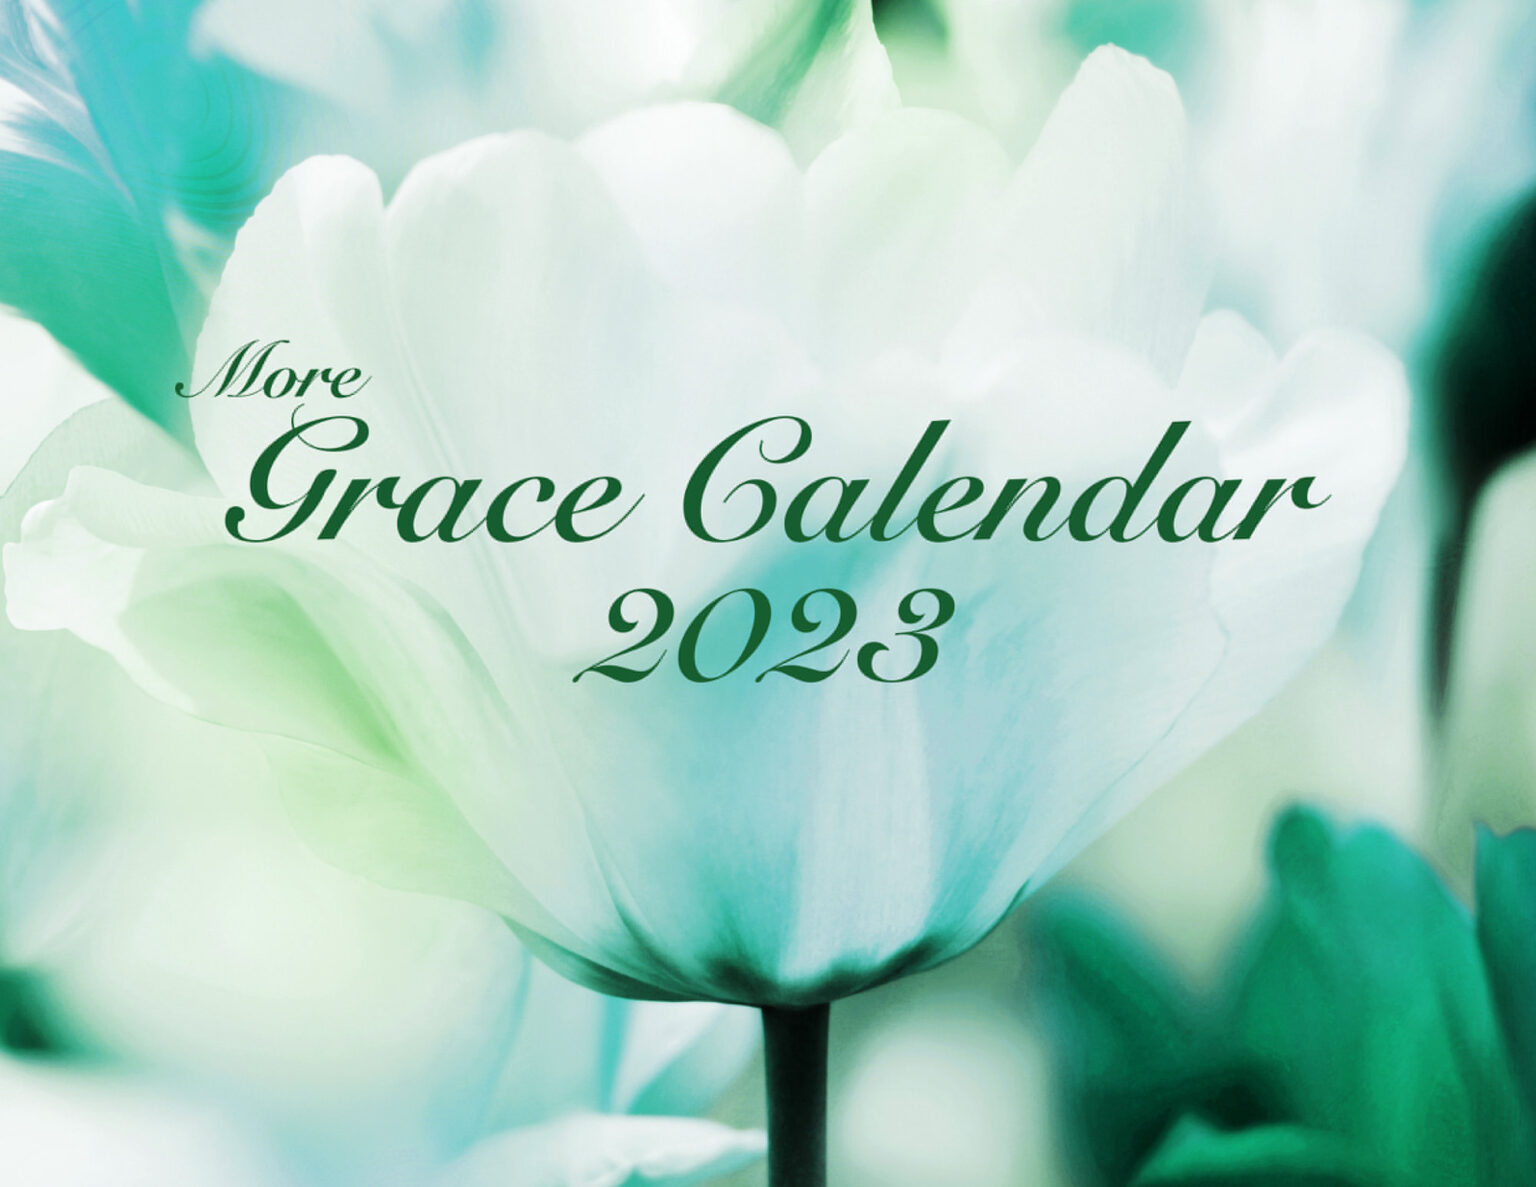 More Grace Calendar MooreGrace, LLC